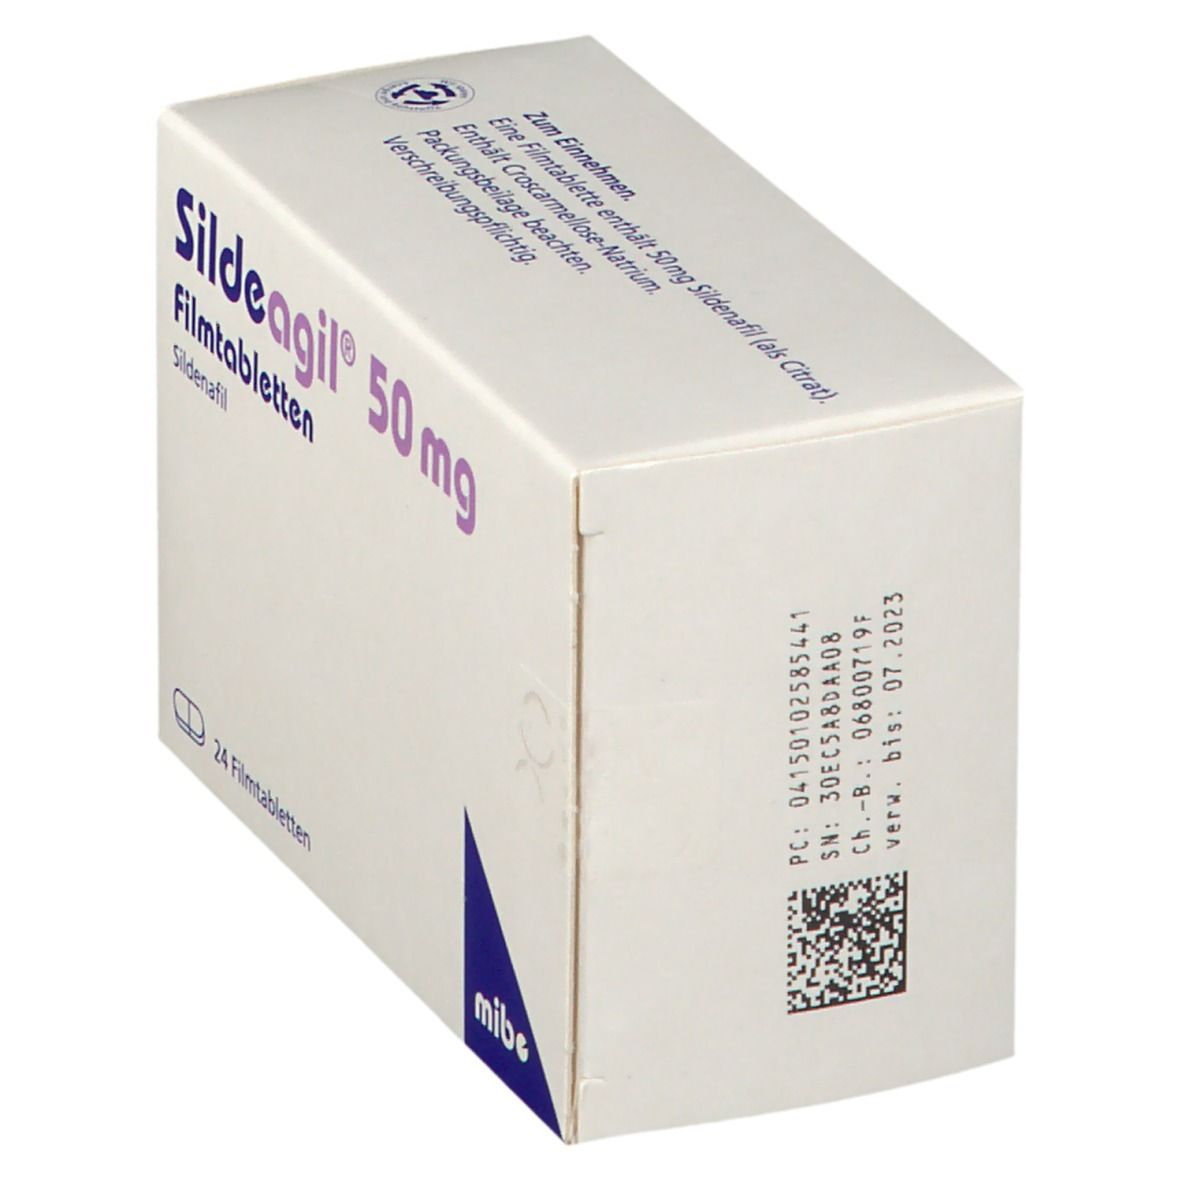 Sildeagil® 50 mg